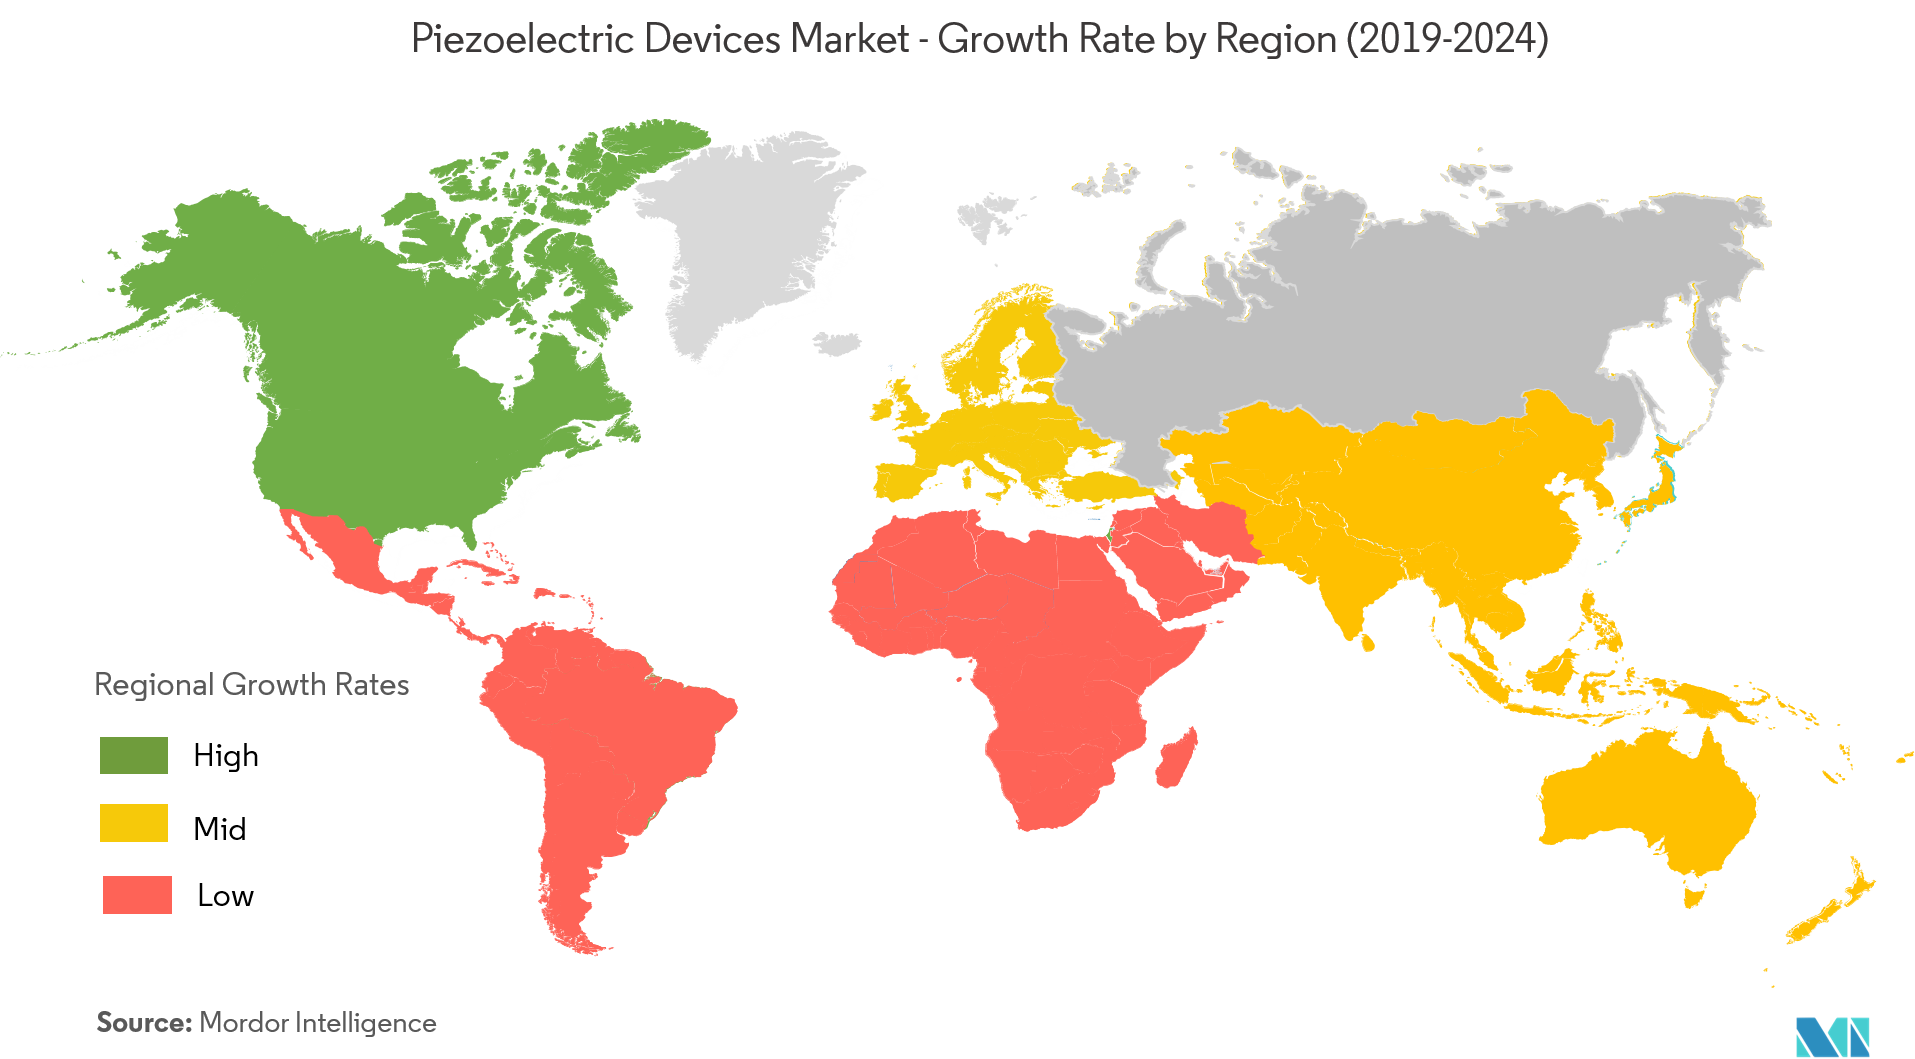 Piezoelectric Device Market Growth by Region